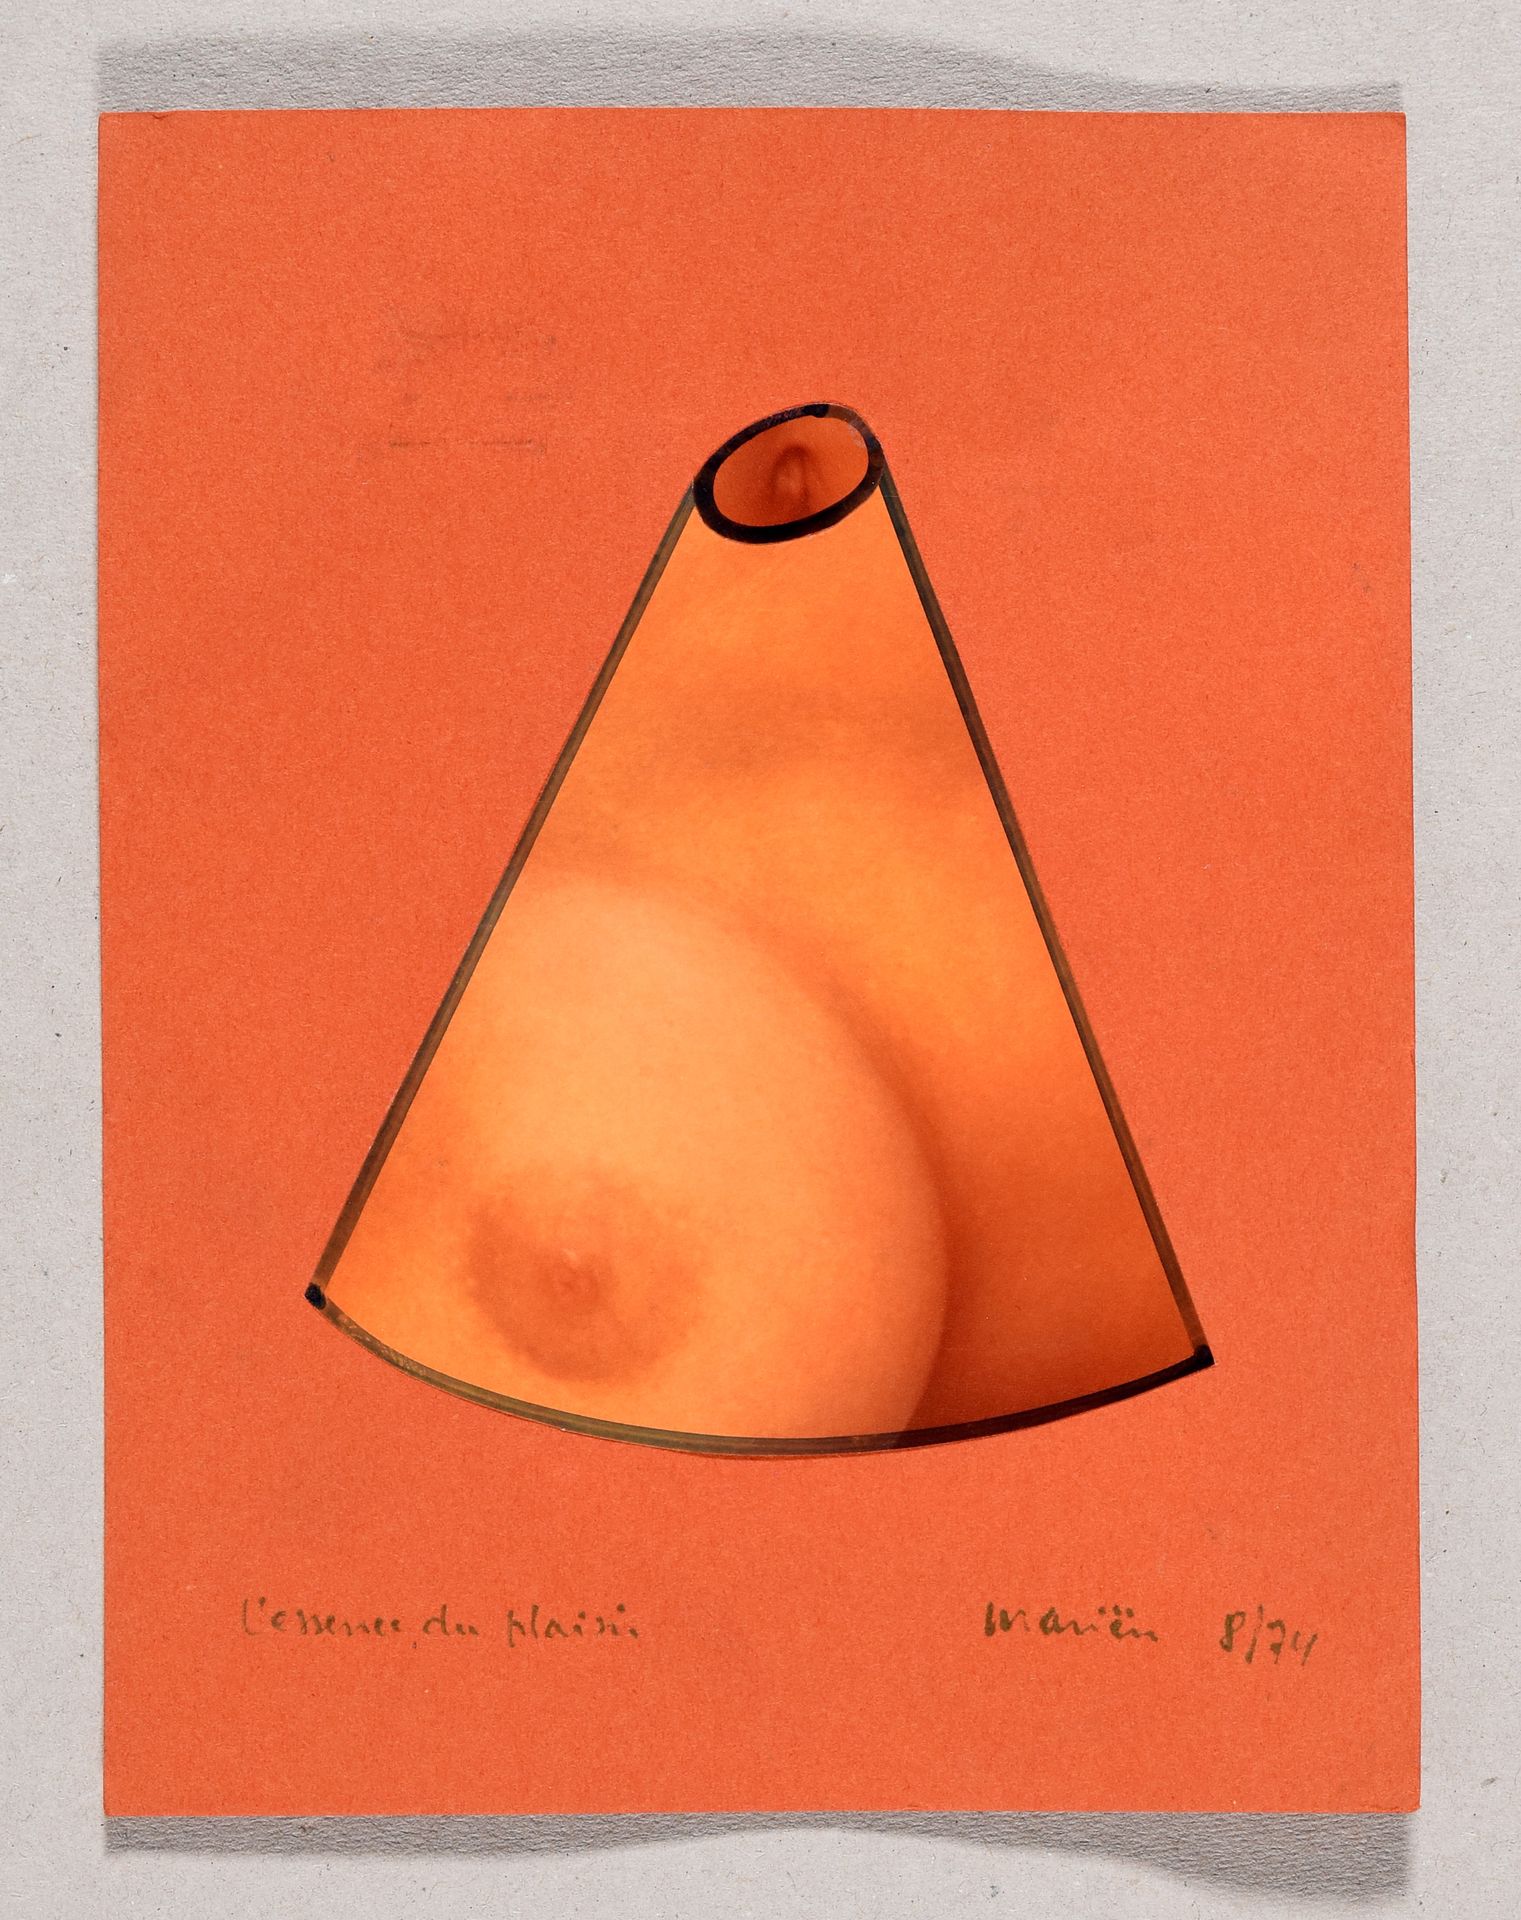 Mariën, Marcel MARIËN, Marcel L'essence du plaisir. 1974 Fotocollage auf orangef&hellip;